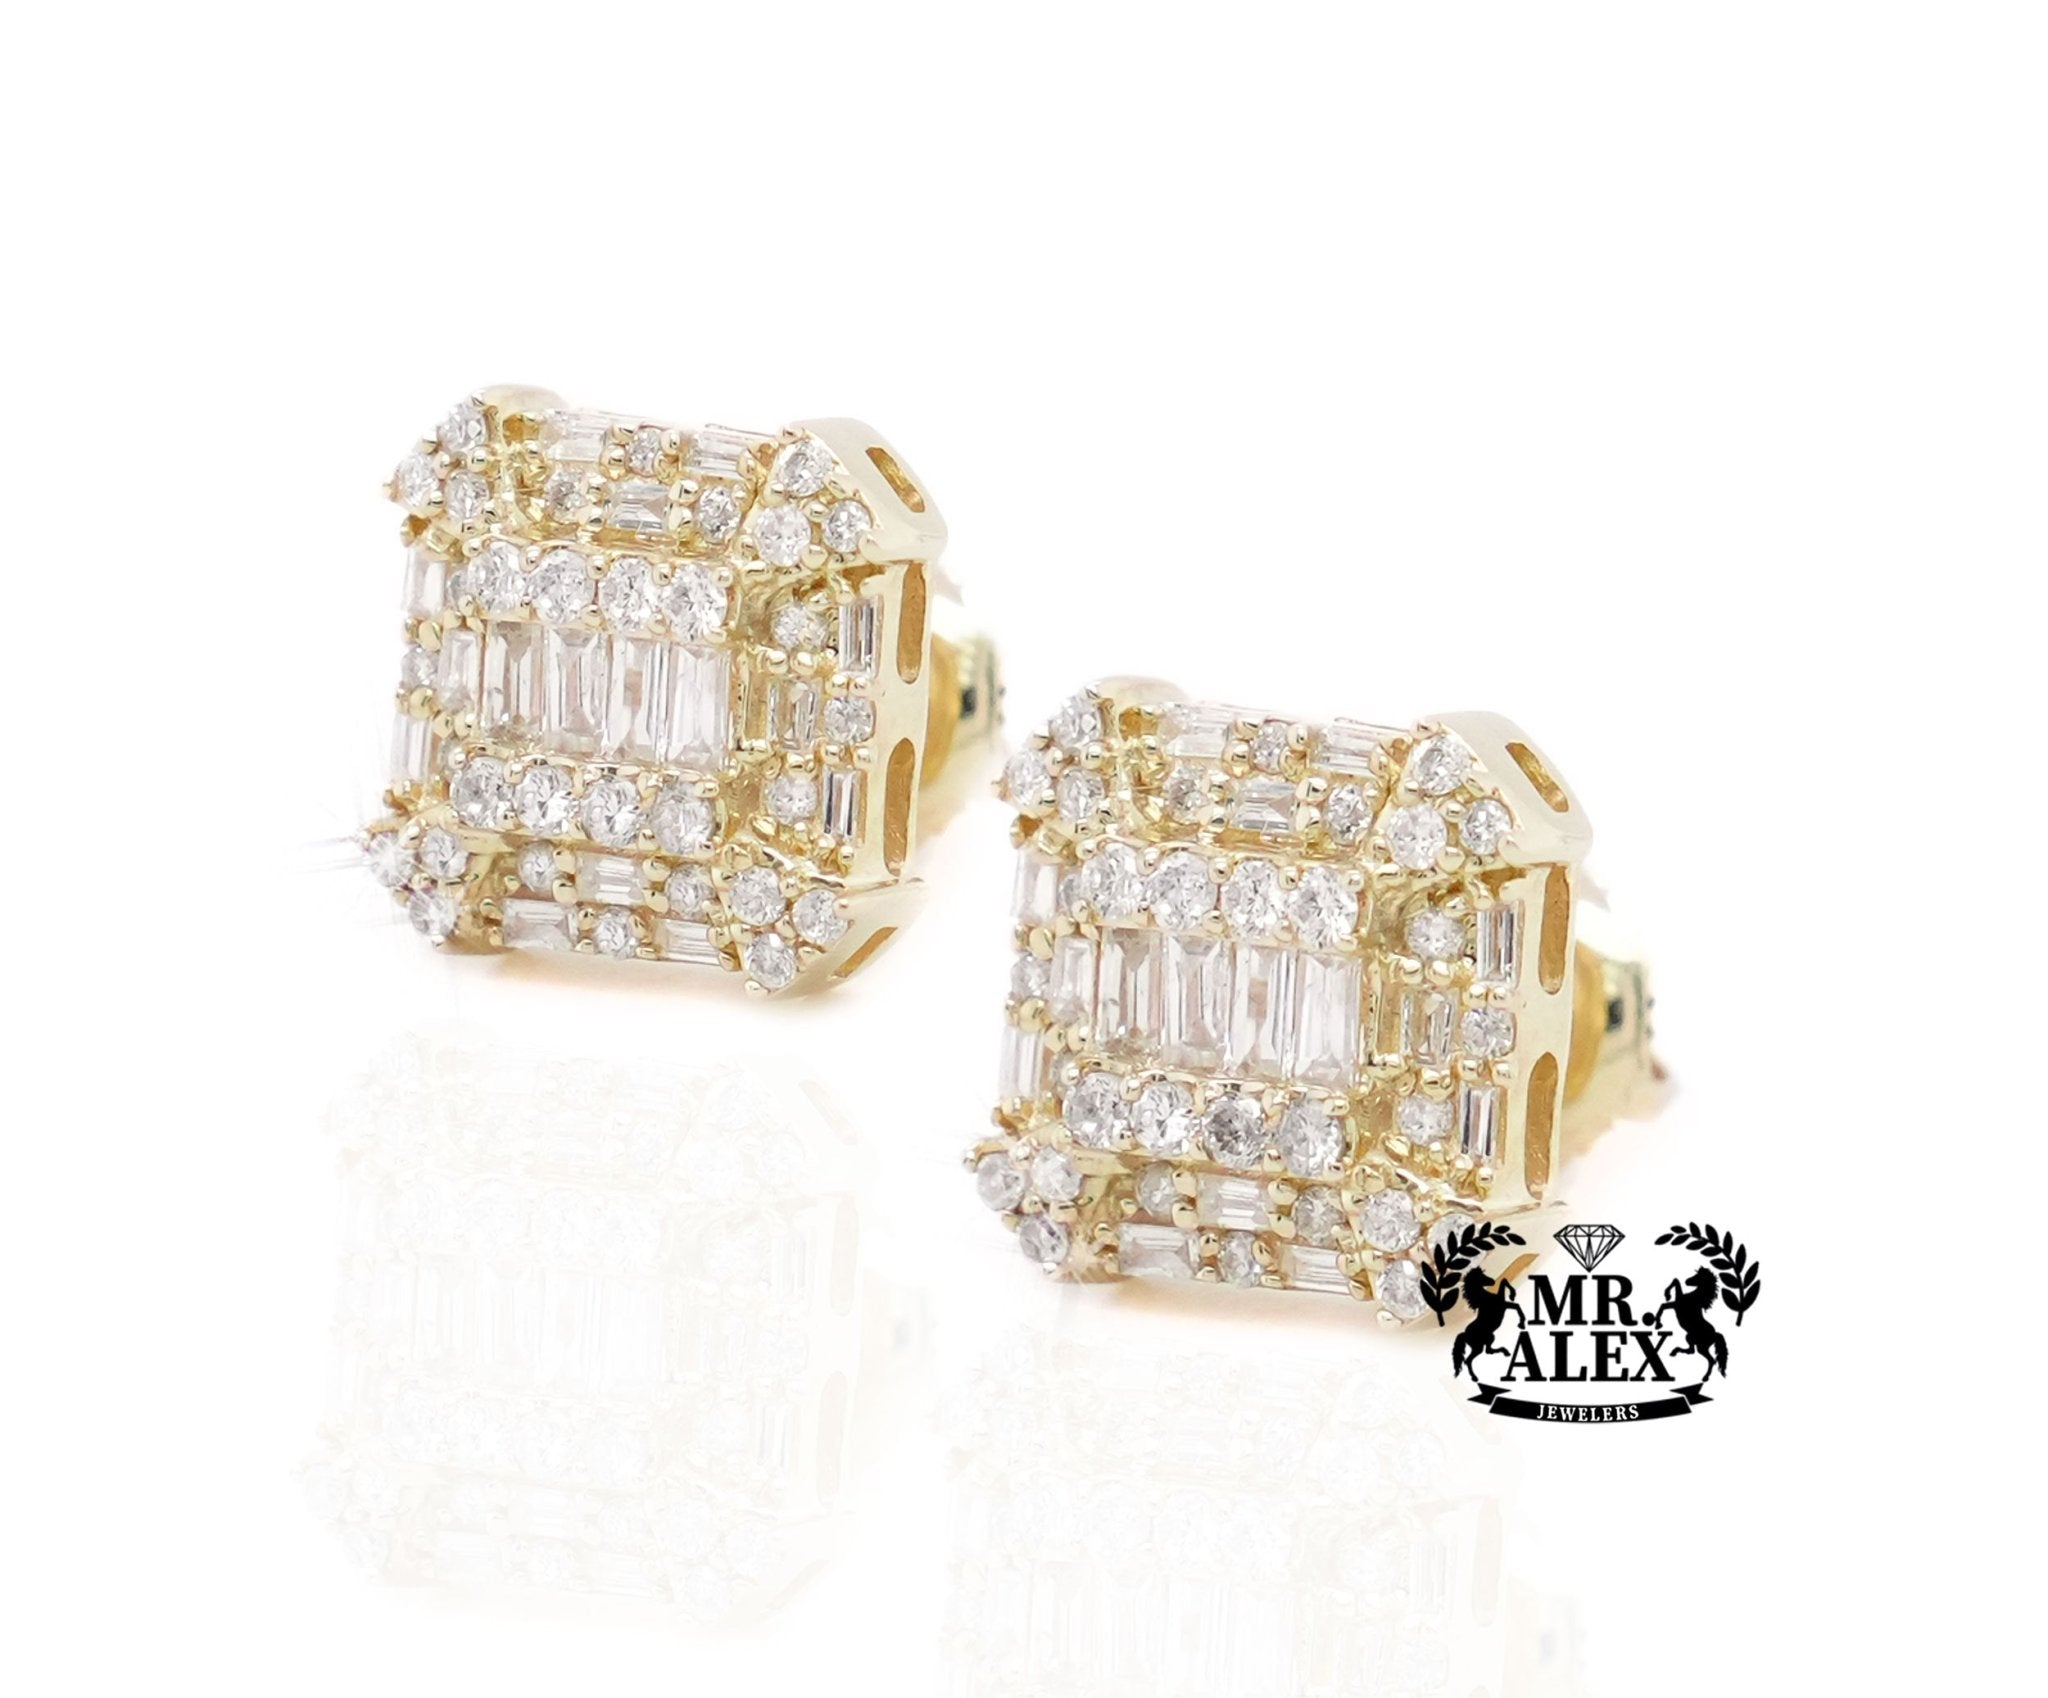 10K Gold Rectangular Cluster Diamond Earrings 0.85ct - Mr. Alex Jewelry